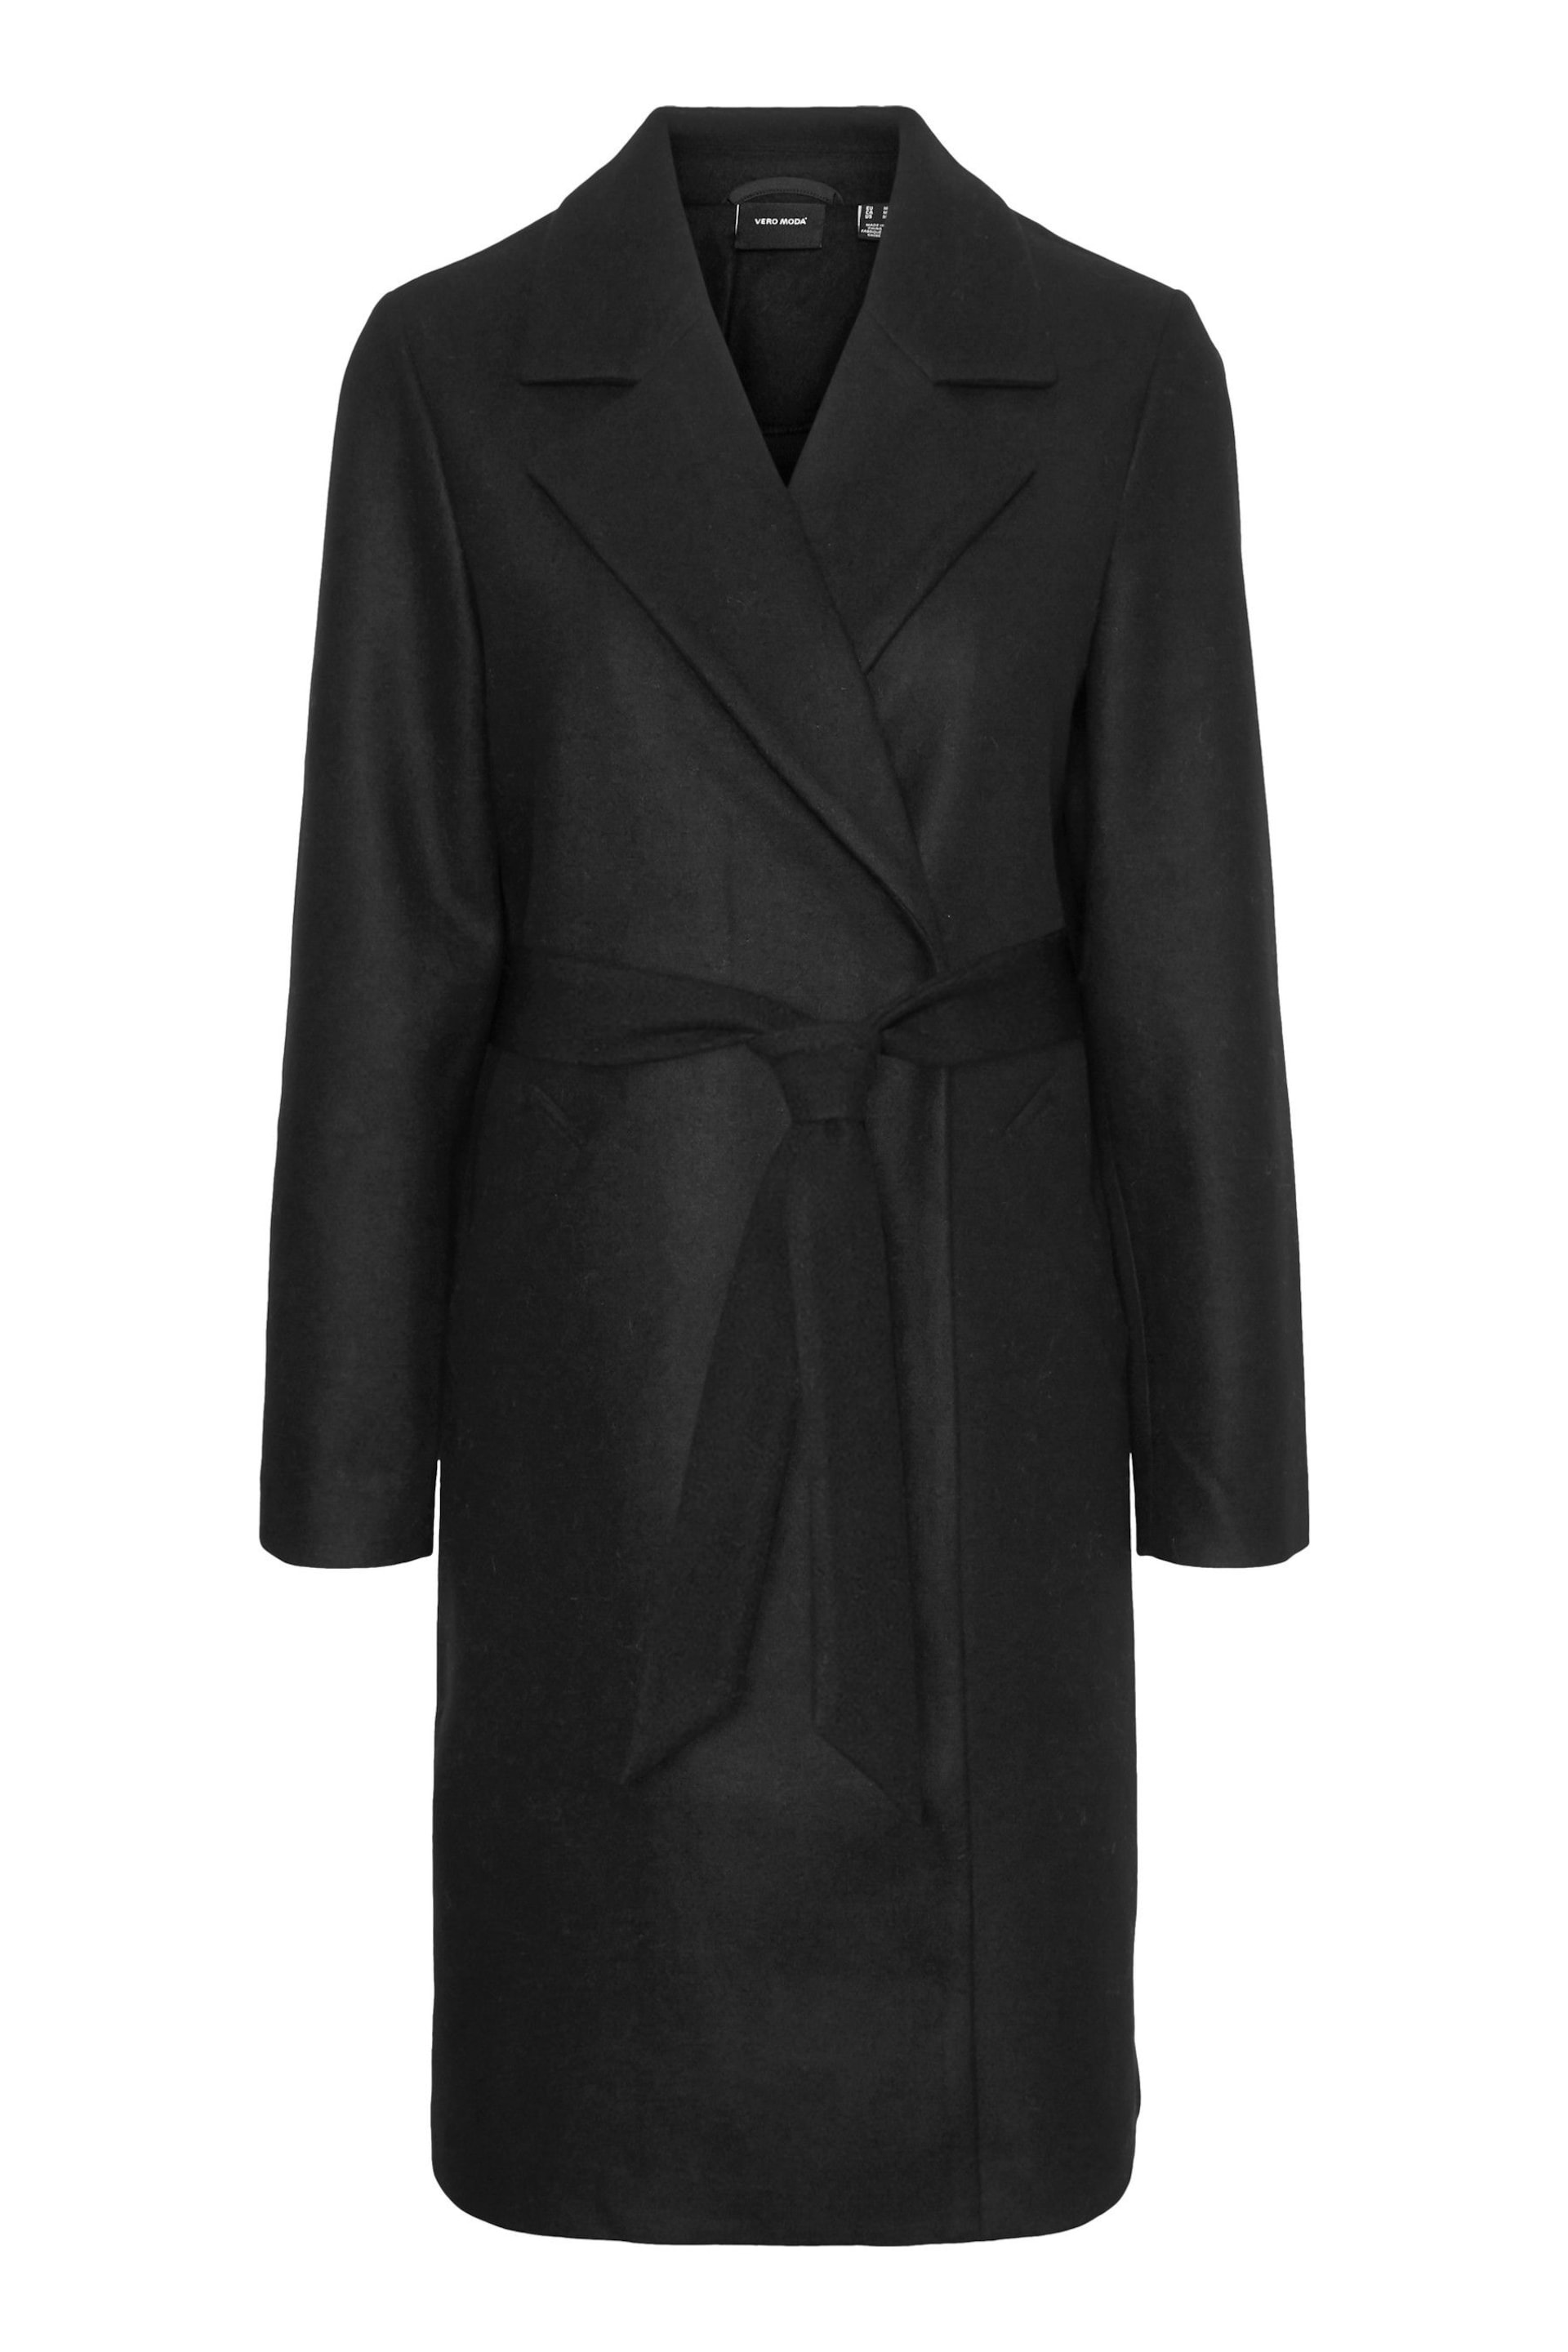 VERO MODA Black Wrap Tailored Coat - Image 5 of 5